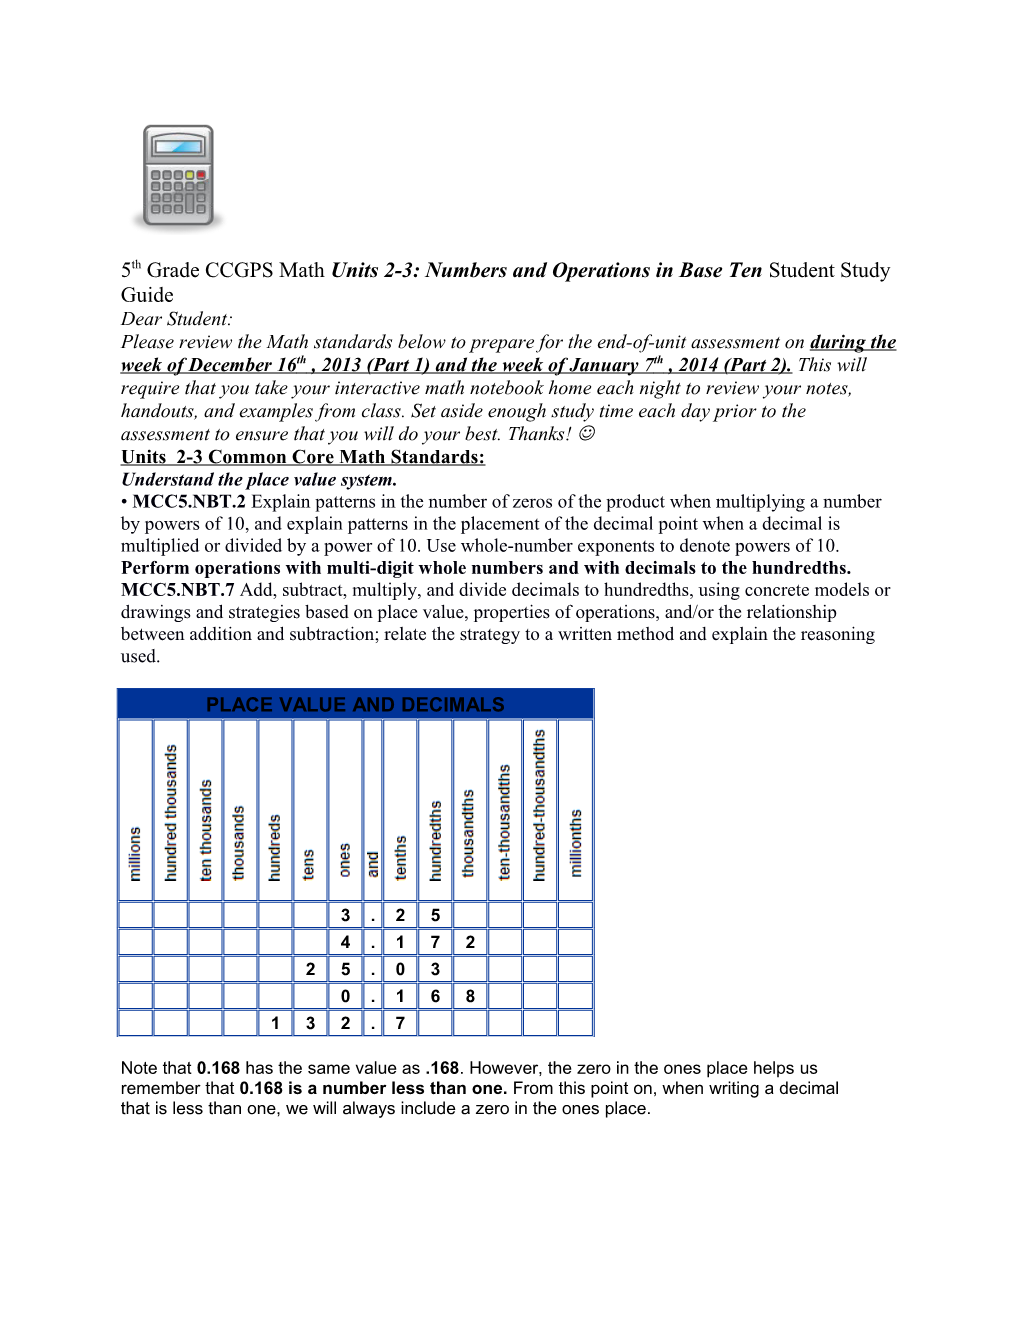 Units 2-3 Common Core Math Standards